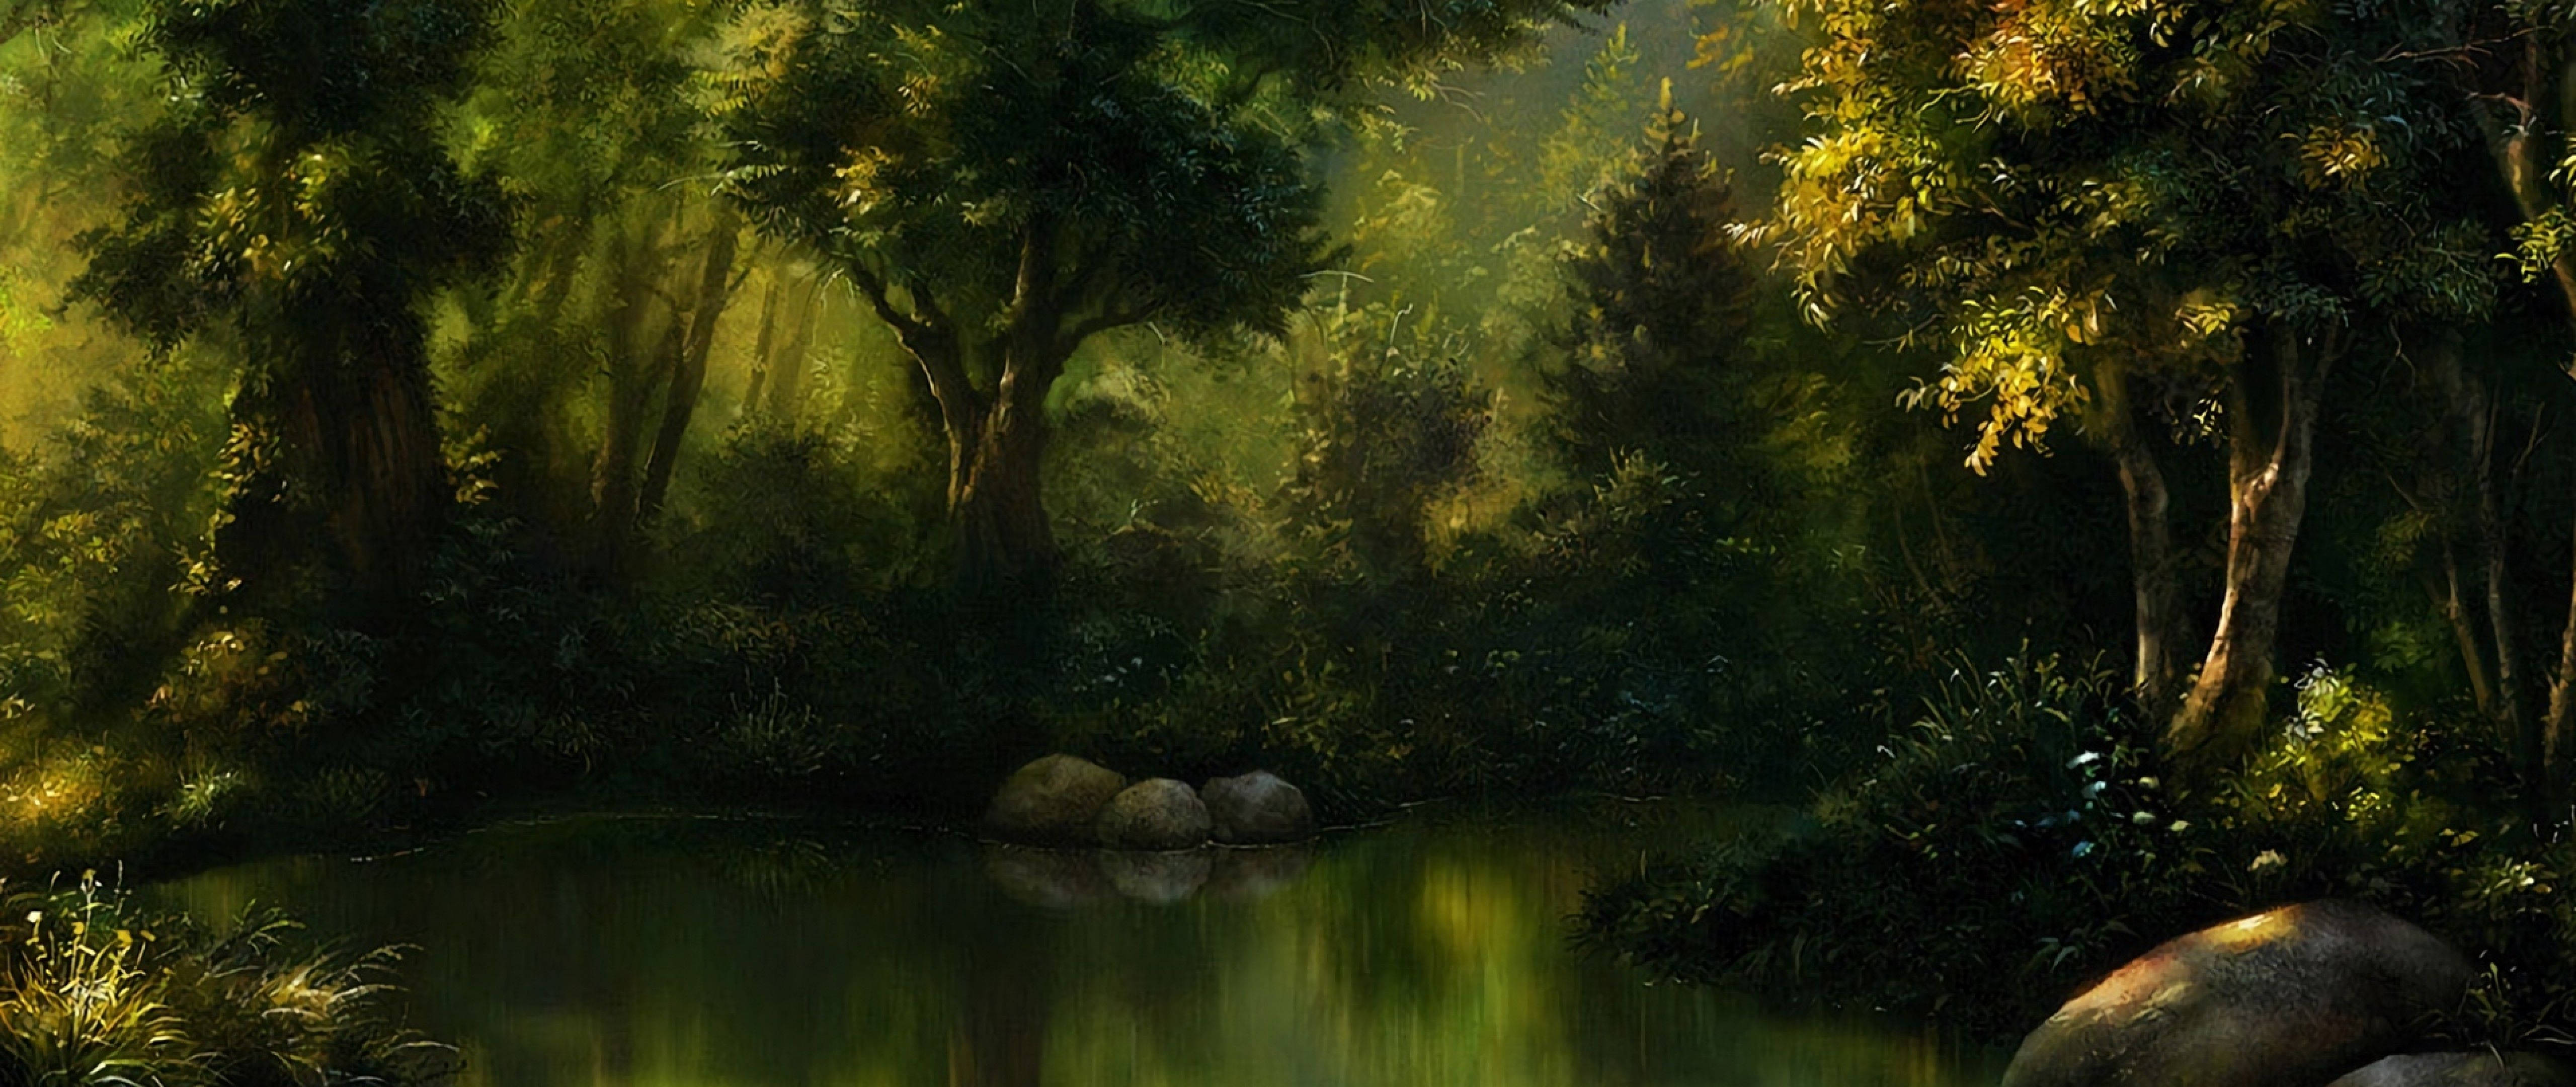 Enchanted Forest Golden Hour Background